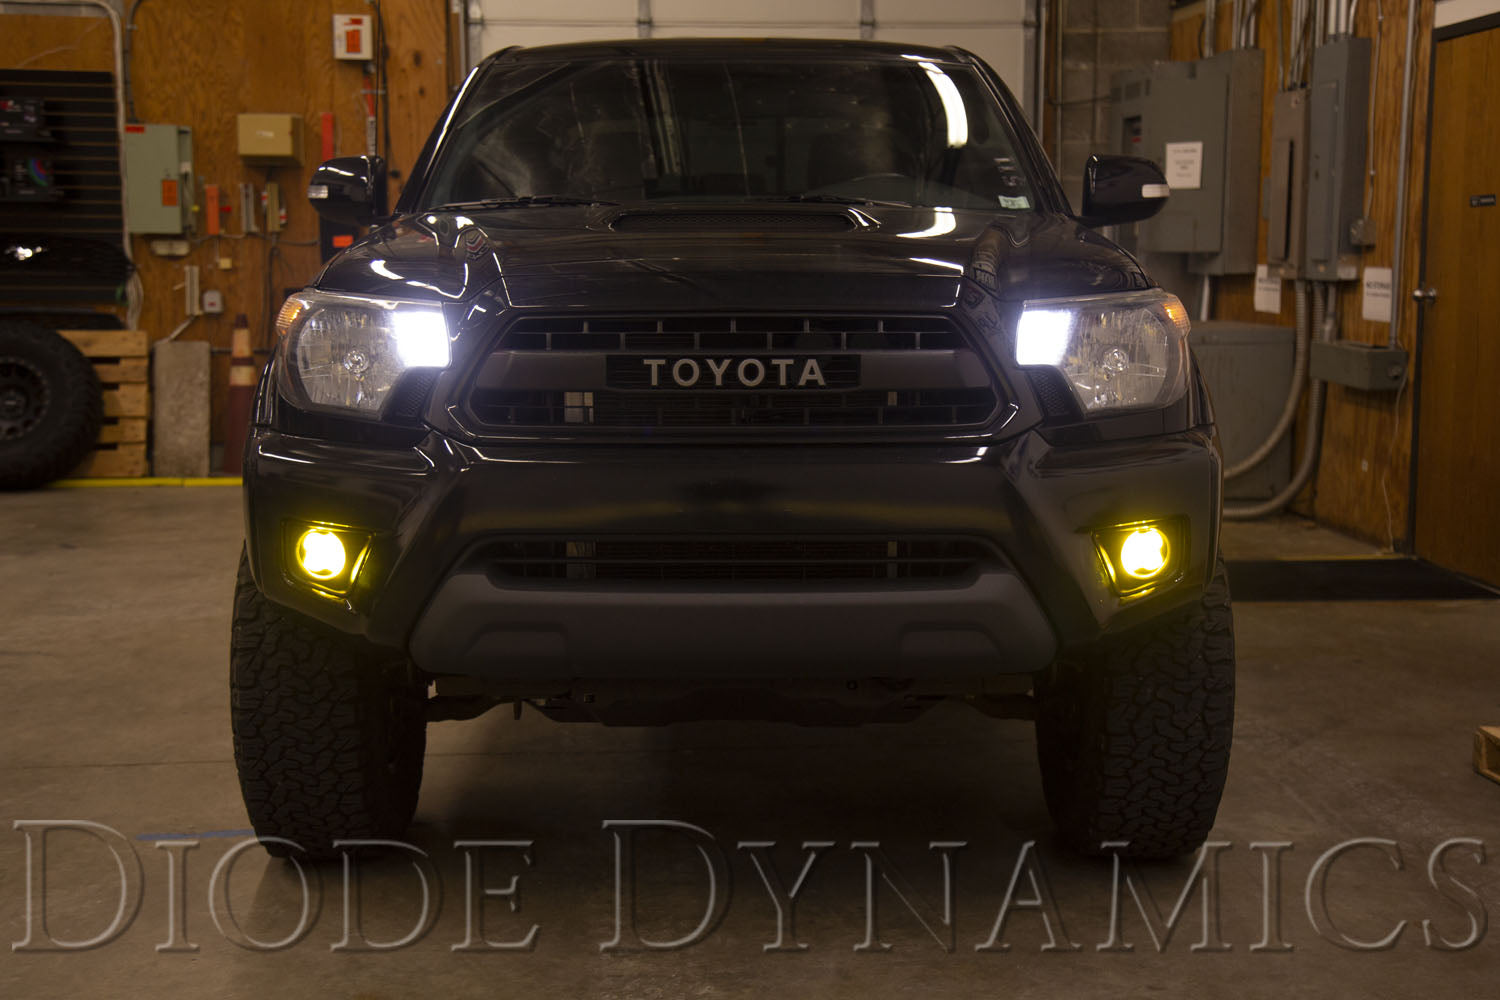 SS3 LED Fog Light Kit for 2012-2015 Toyota Tacoma Yellow SAE Fog Pro Diode Dynamics